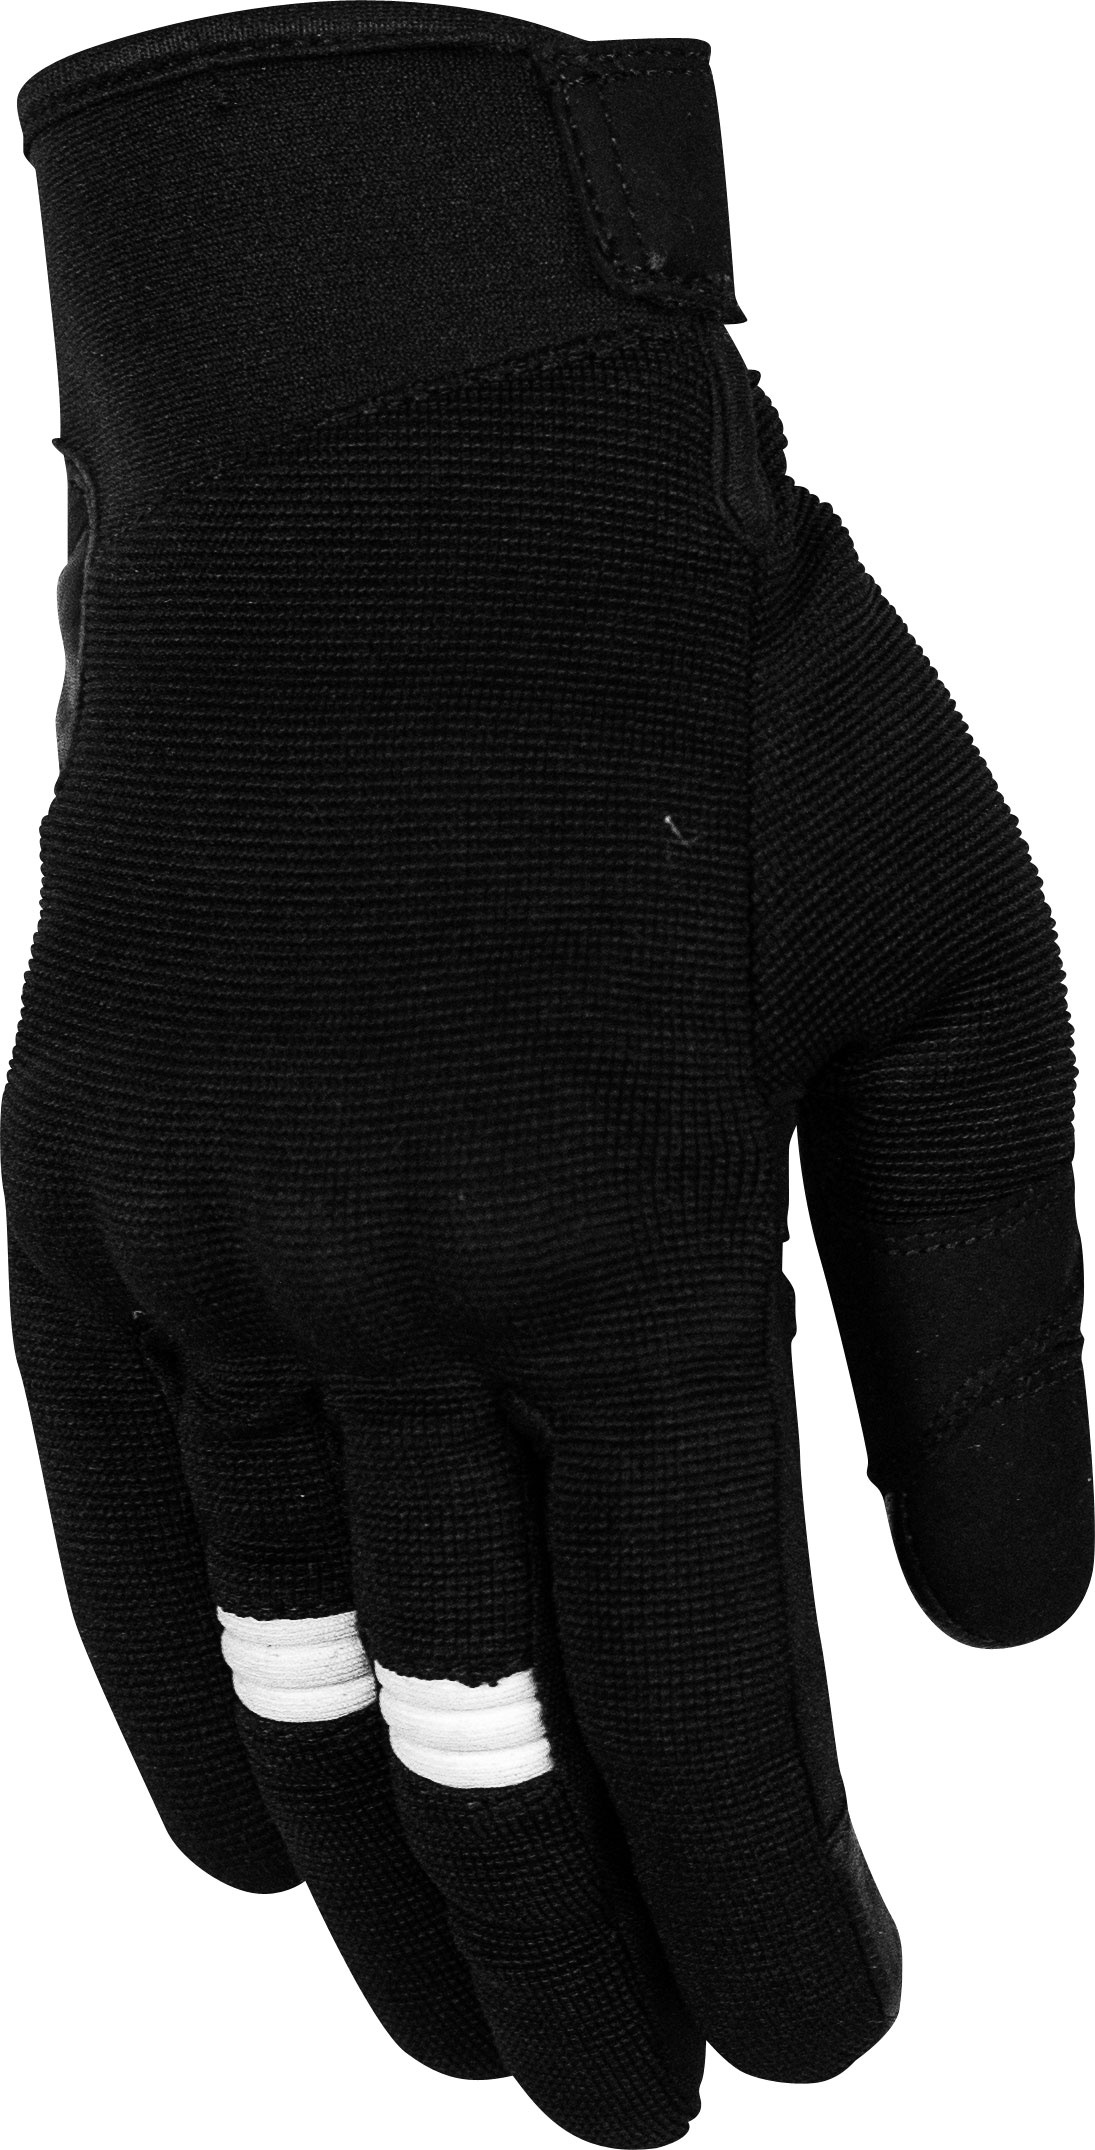 Rusty Stitches Bonnie V2, gants femmes - Noir/Blanc - XS